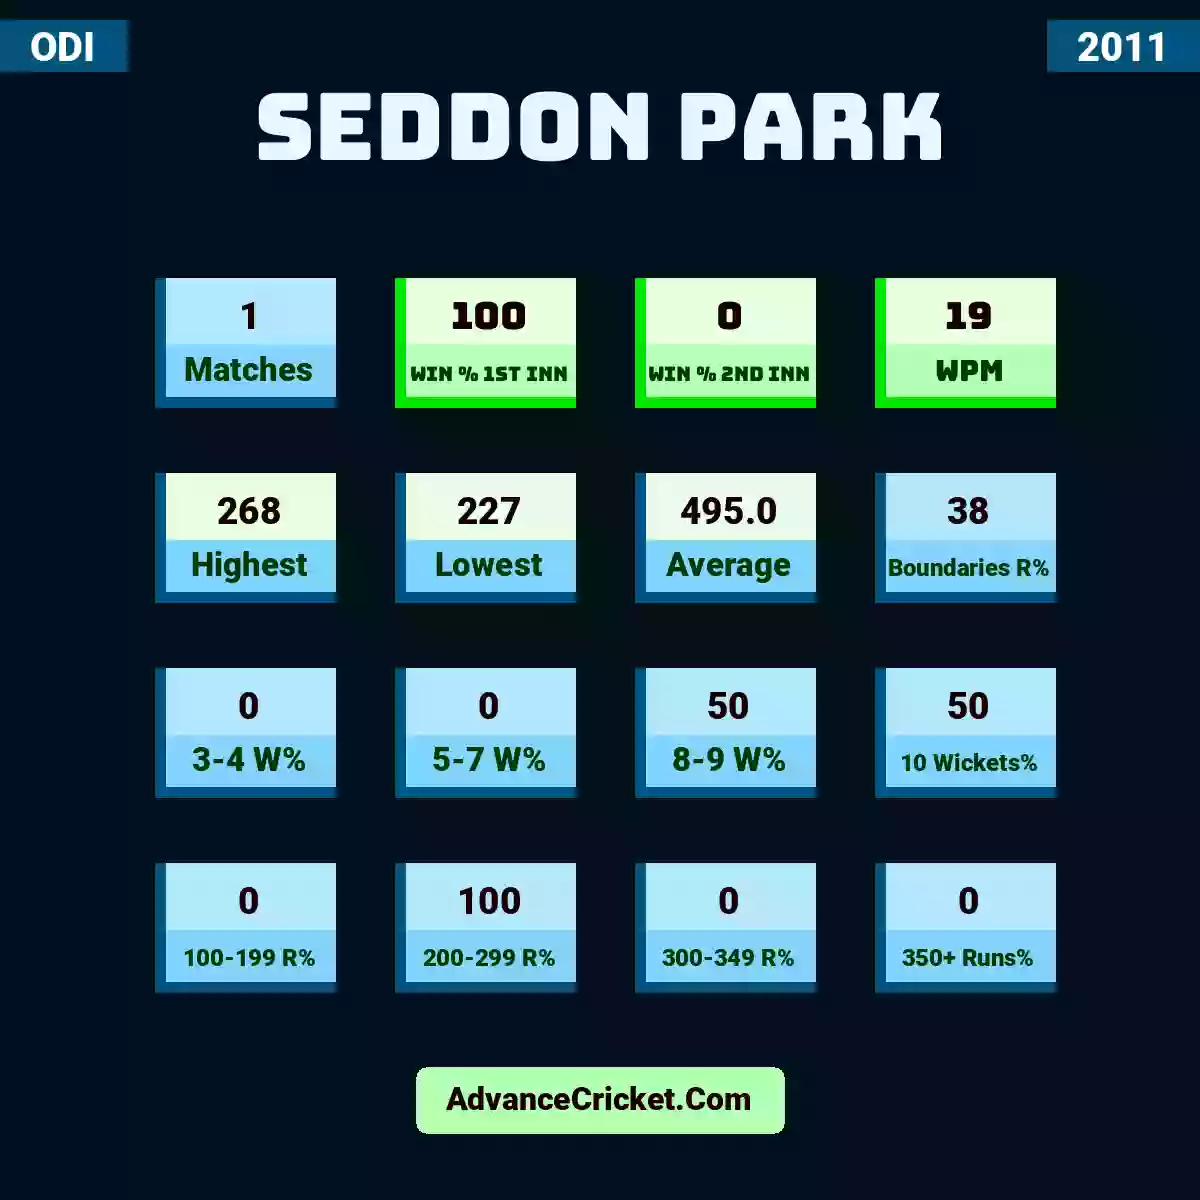 Image showing Seddon Park with Matches: 1, Win % 1st Inn: 100, Win % 2nd Inn: 0, WPM: 19, Highest: 268, Lowest: 227, Average: 495.0, Boundaries R%: 38, 3-4 W%: 0, 5-7 W%: 0, 8-9 W%: 50, 10 Wickets%: 50, 100-199 R%: 0, 200-299 R%: 100, 300-349 R%: 0, 350+ Runs%: 0.